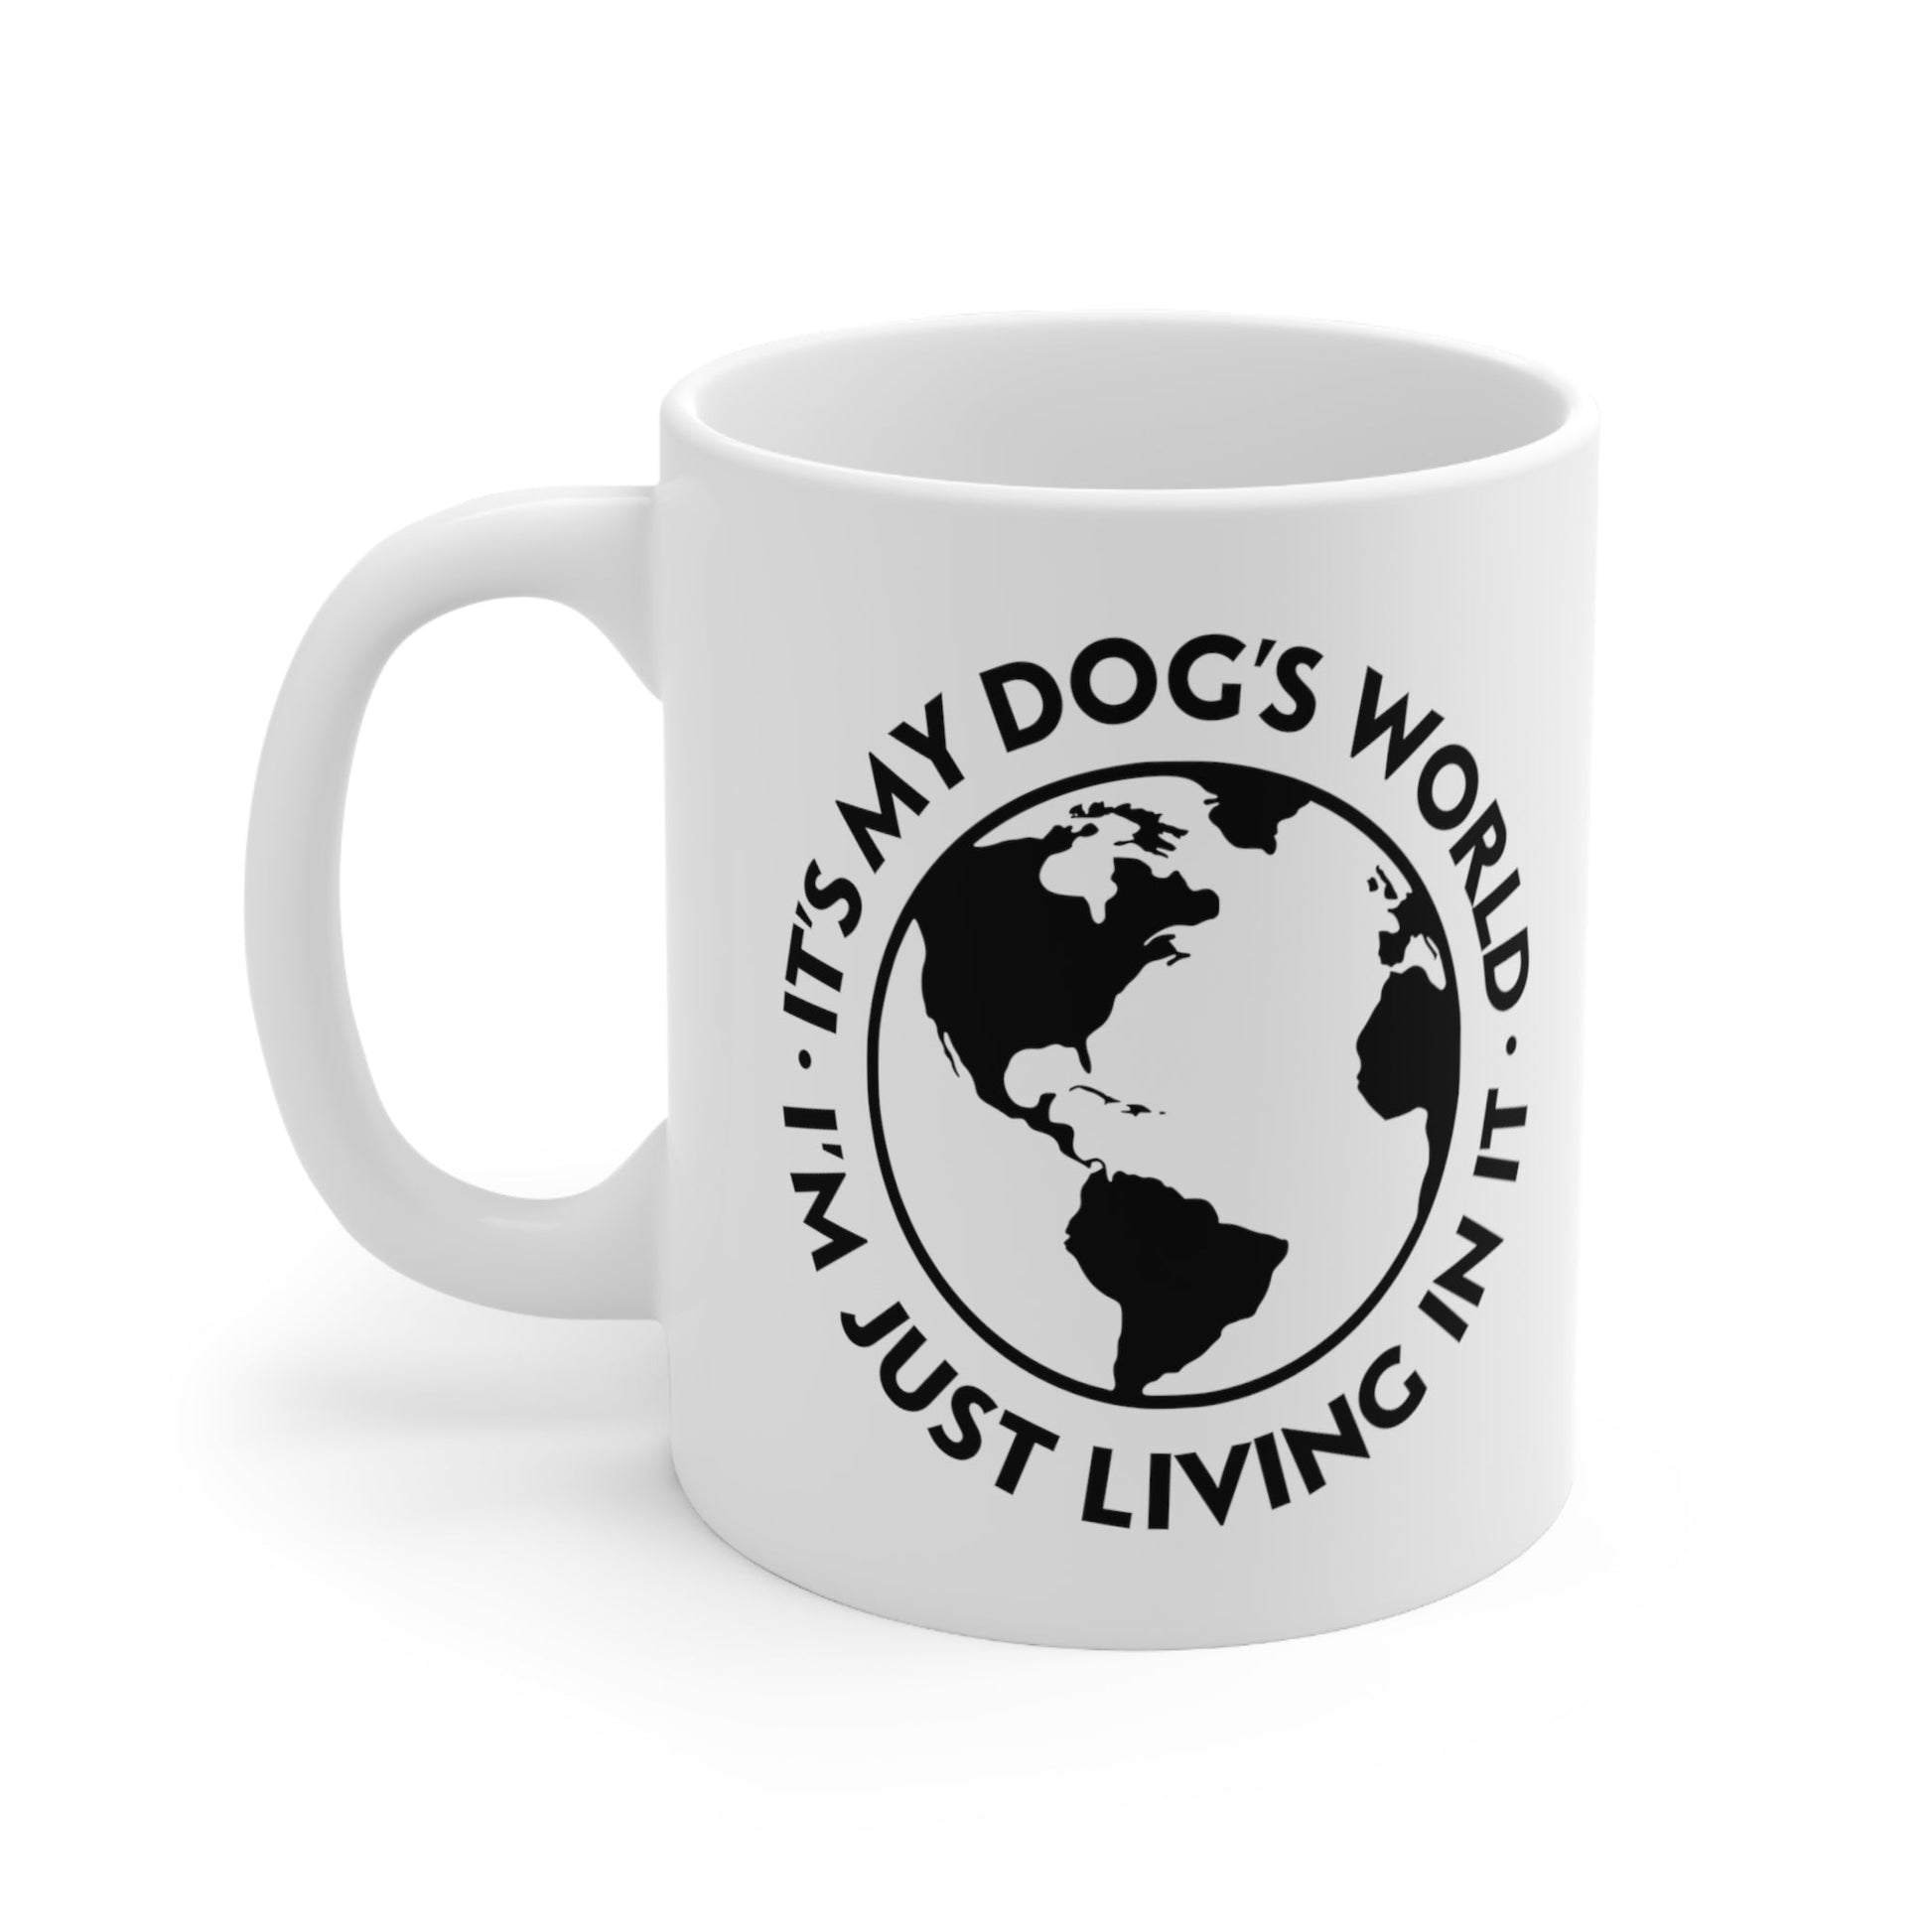 It's My Dog's World | Mug - Detezi Designs-19209446100087595556